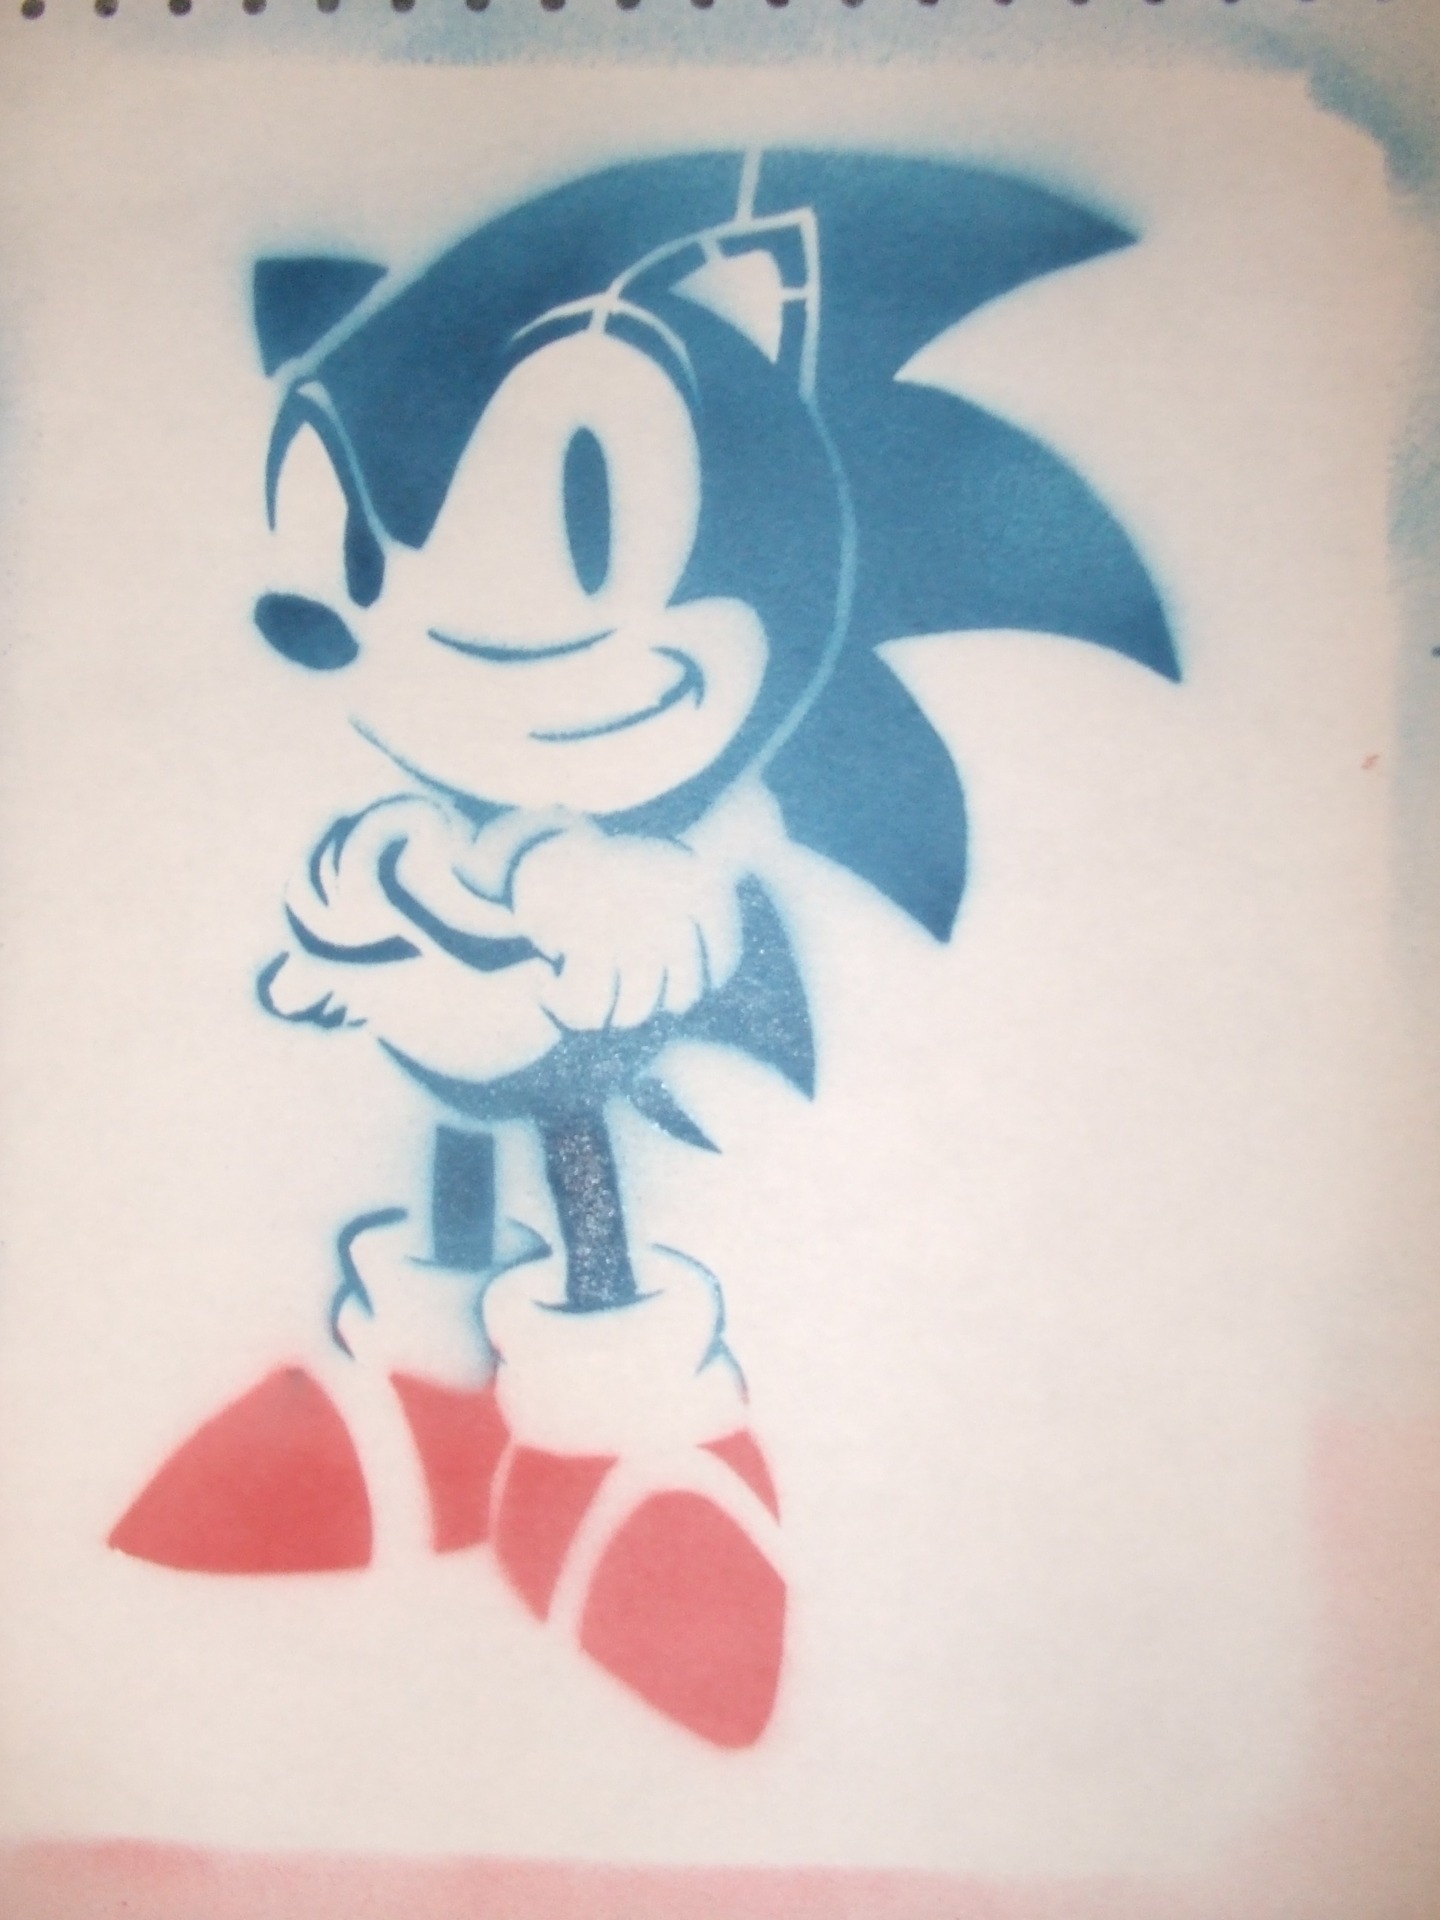 Sonic stencil for DeVeAn